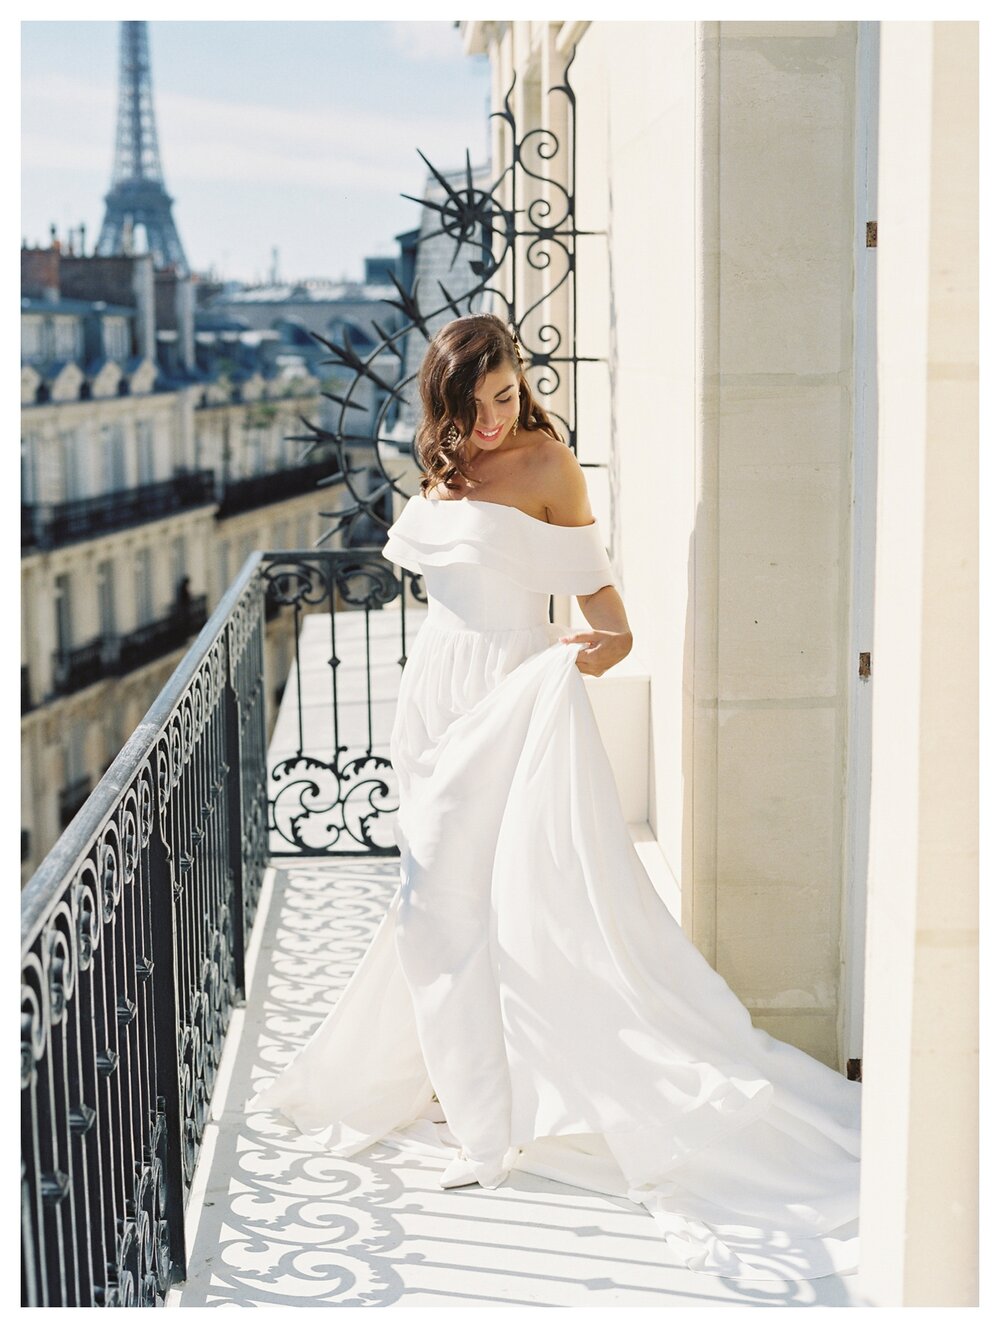  Bride on Paris balcony, France wedding photographer 